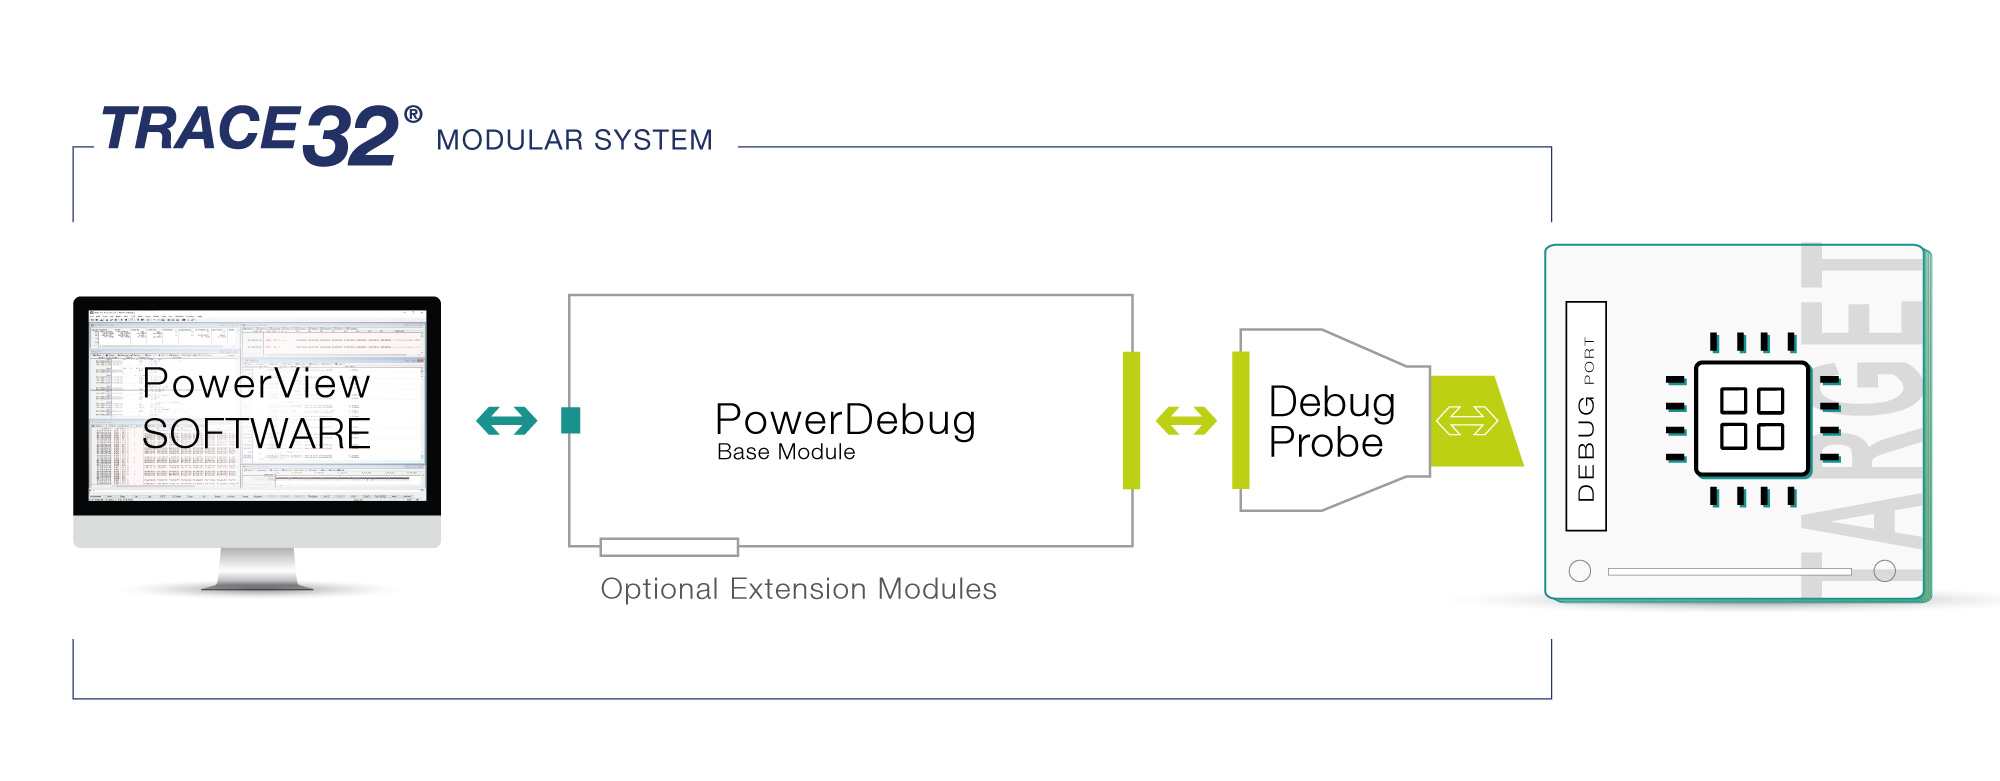 PowerDebug System - Modular Structure